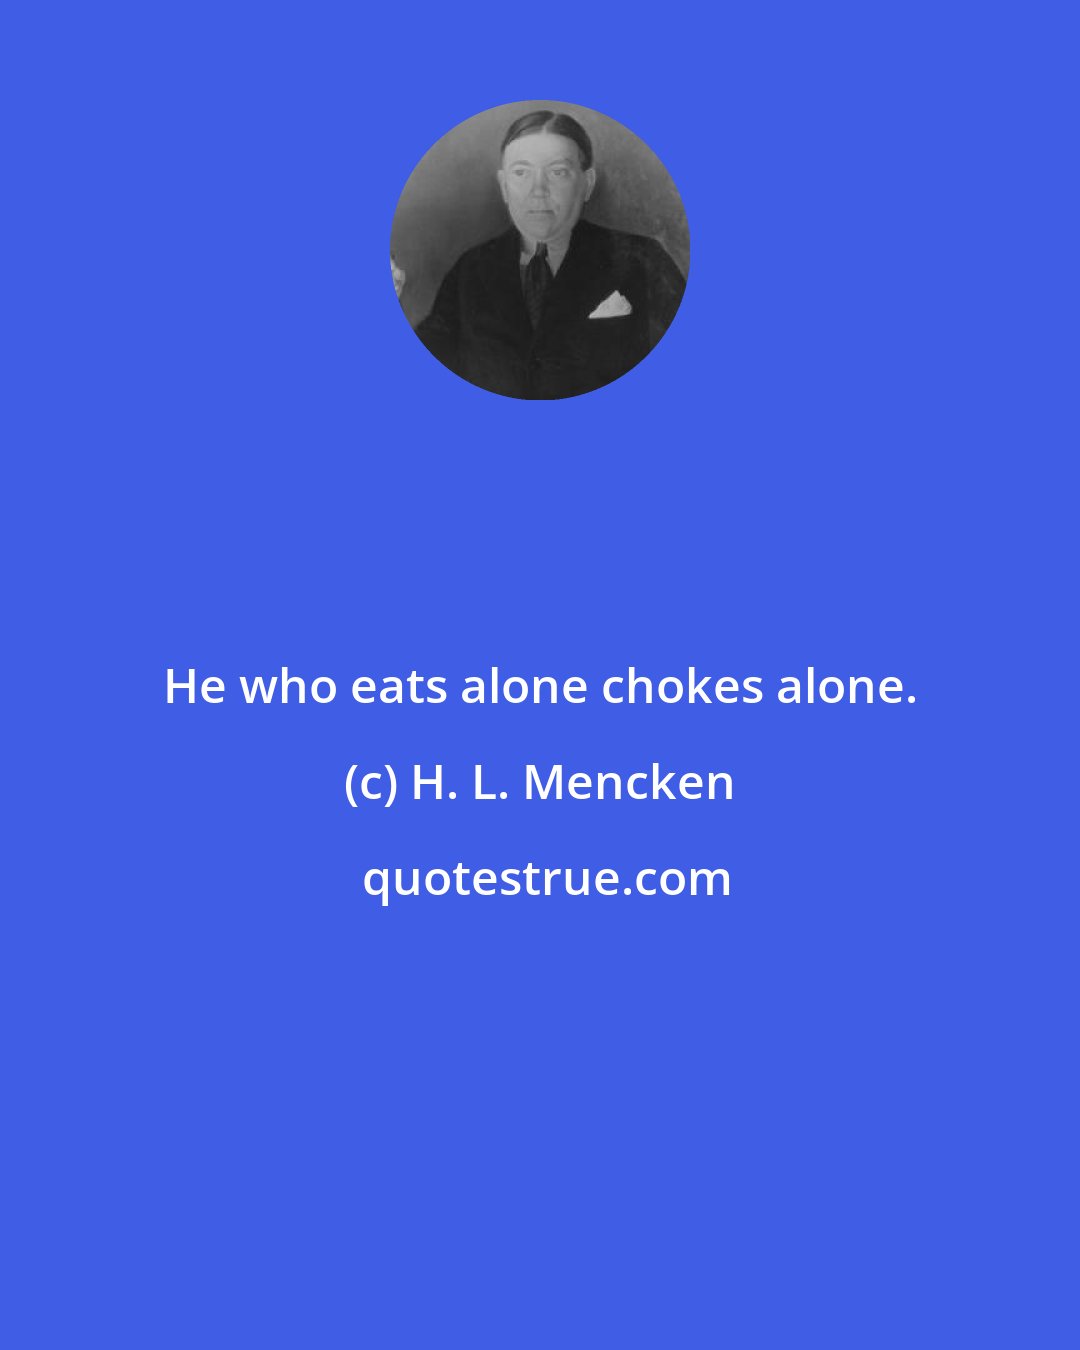 H. L. Mencken: He who eats alone chokes alone.